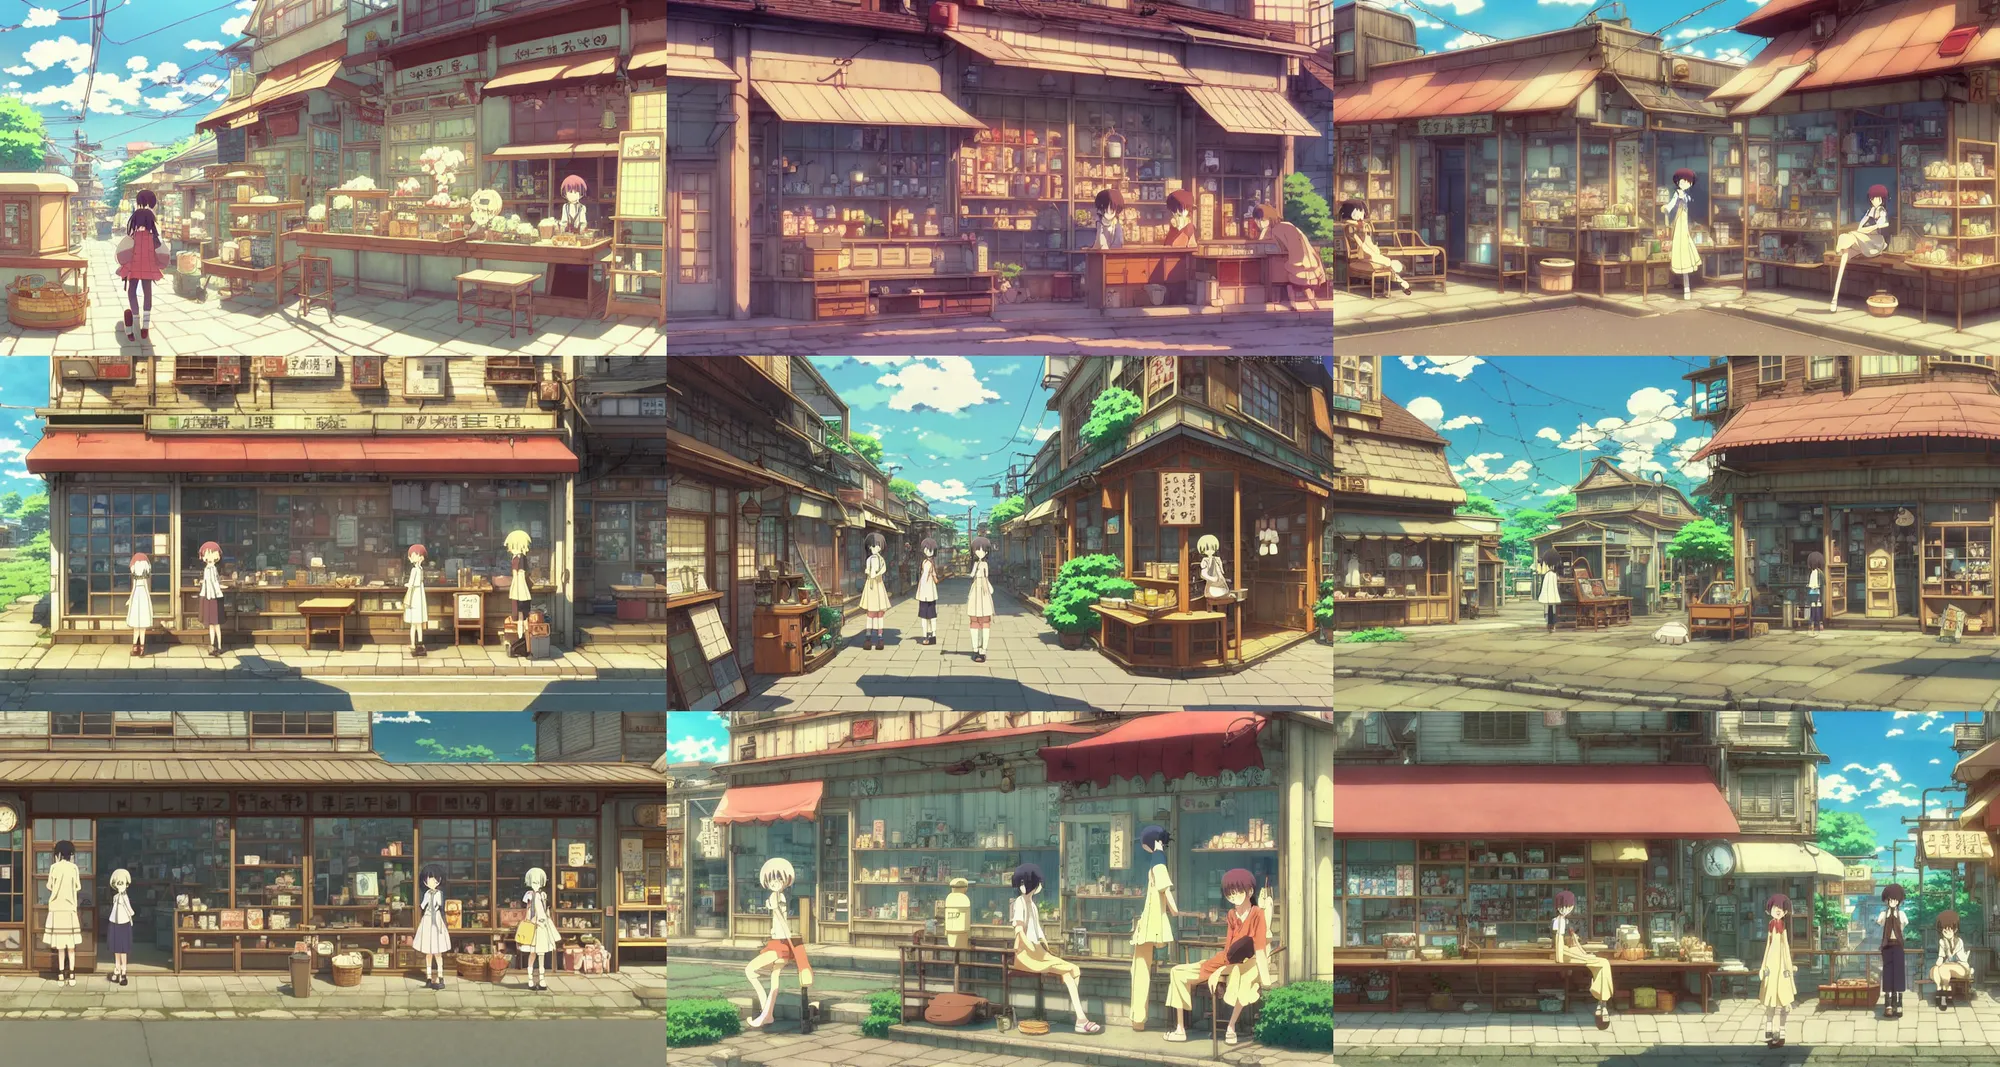 Prompt: beautiful slice of life anime scene of rural steampunk storefront, summer, relaxing, calm, cozy, peaceful, by mamoru hosoda, hayao miyazaki, makoto shinkai